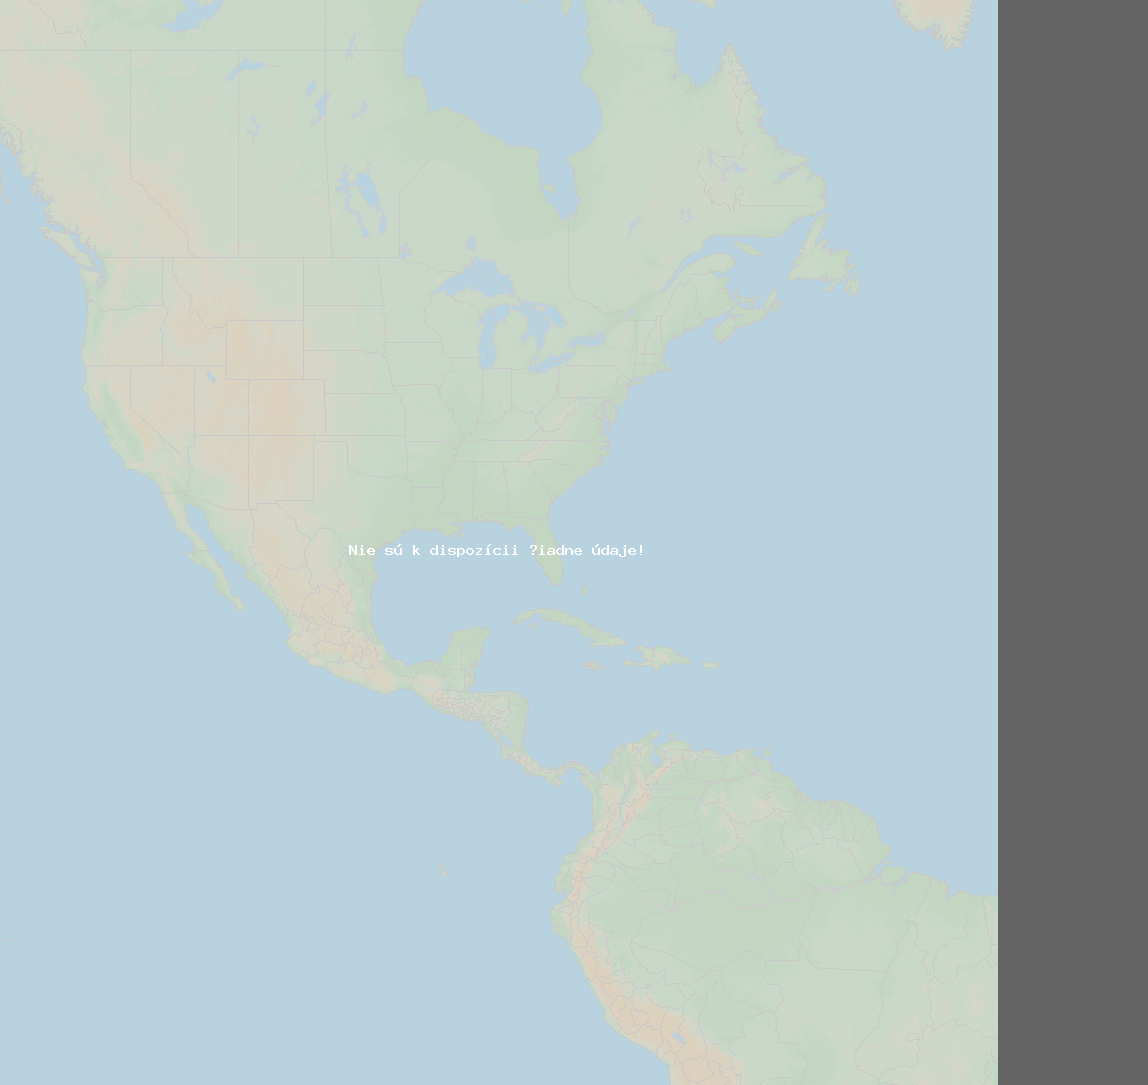 Pomer bleskov (Stanica indianapolis) North America 2021 